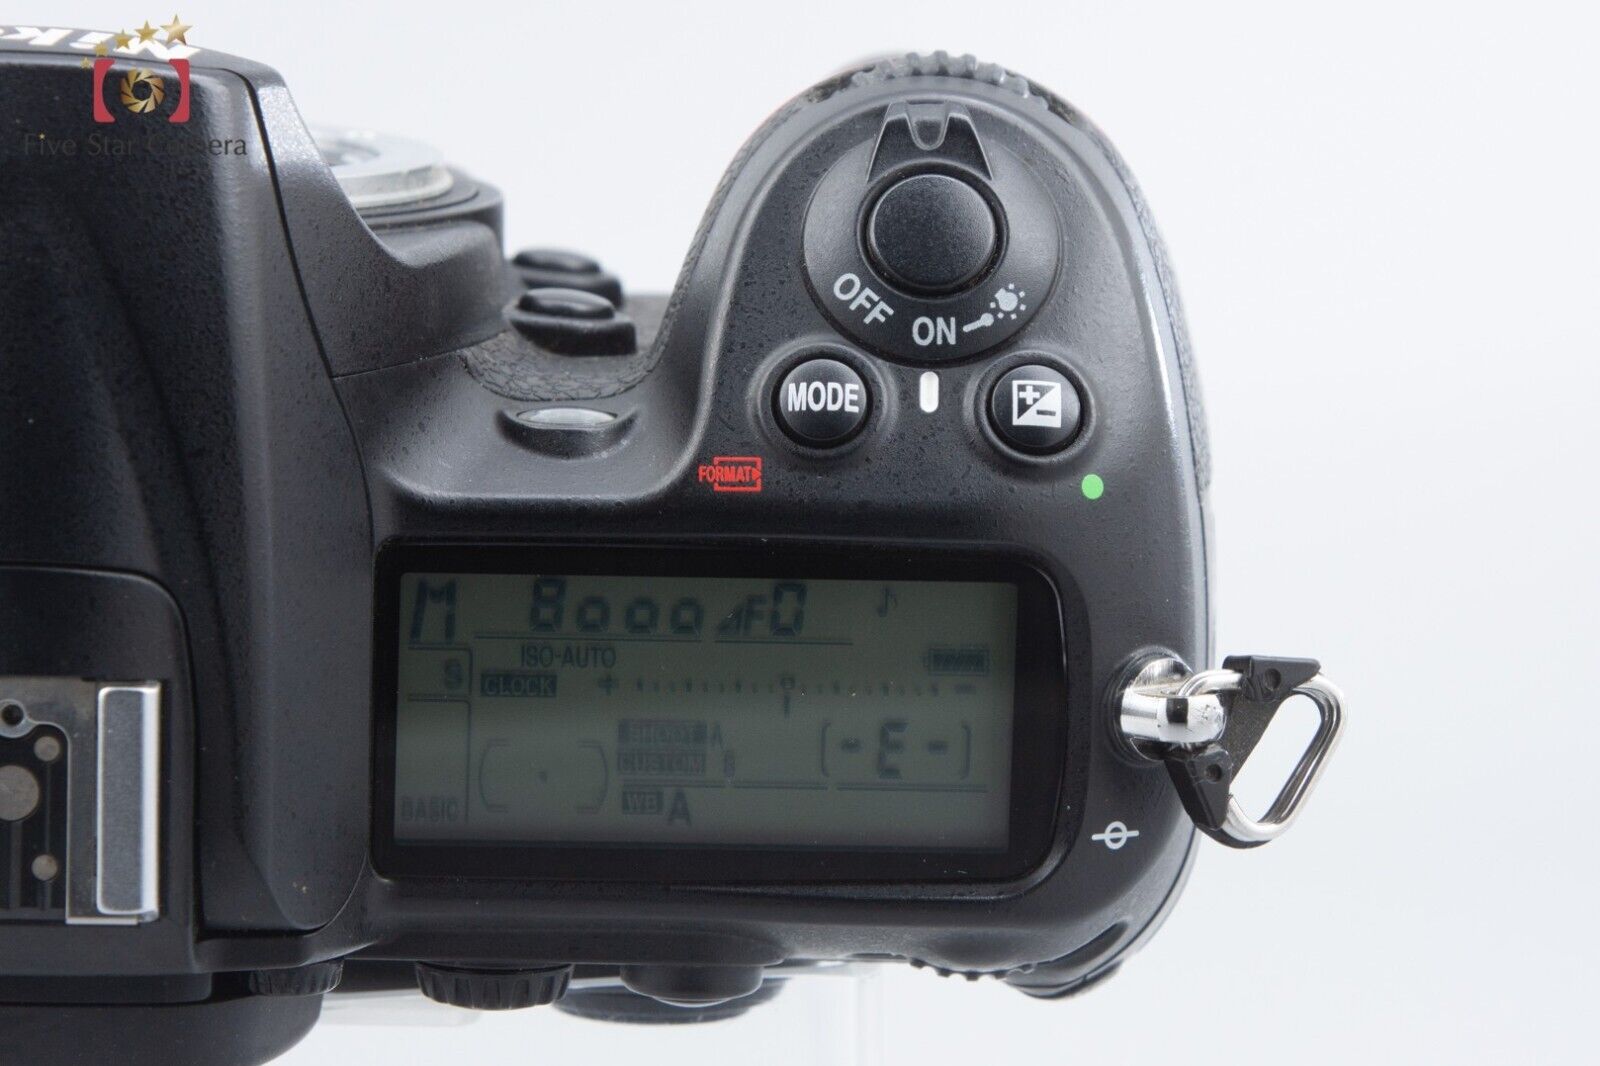 Nikon D300 12.3 MP Digital SLR Camera Body